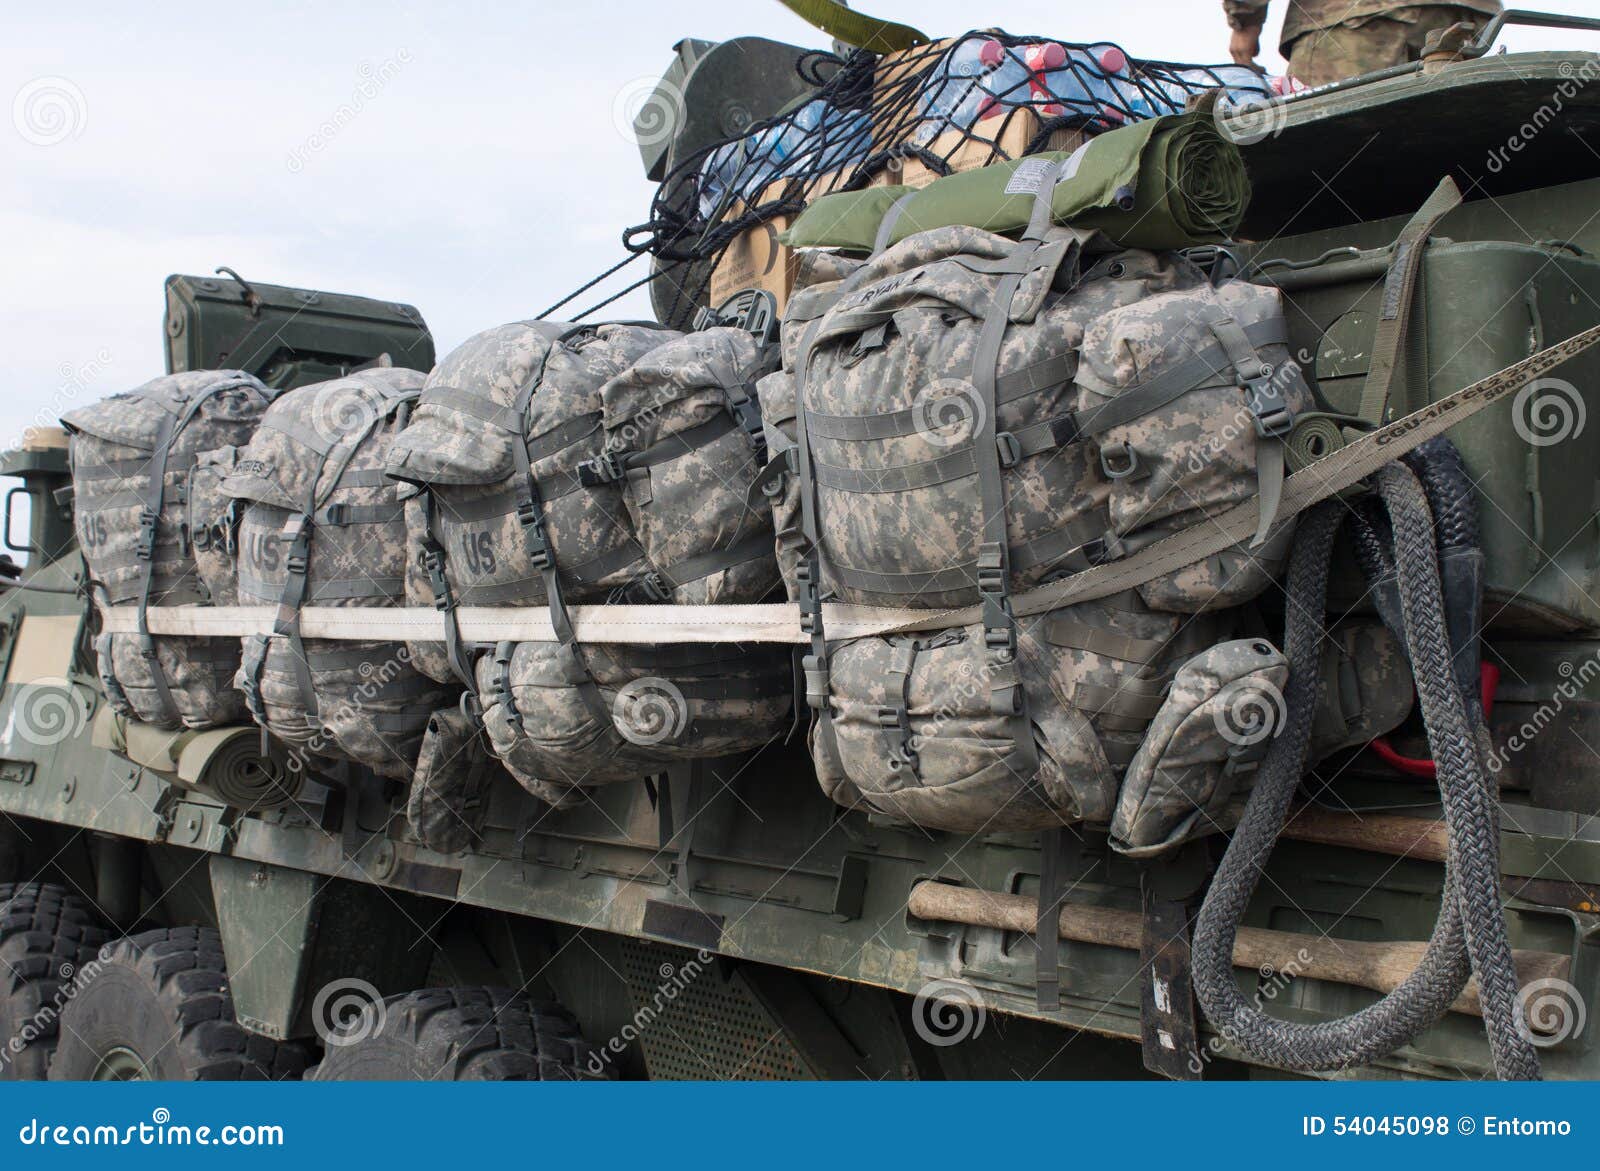 backpacks-m-icv-nato-caravan-tied-united-states-army-infantry-carrier-vehicle-display-ploiesti-romania-54045098.jpg